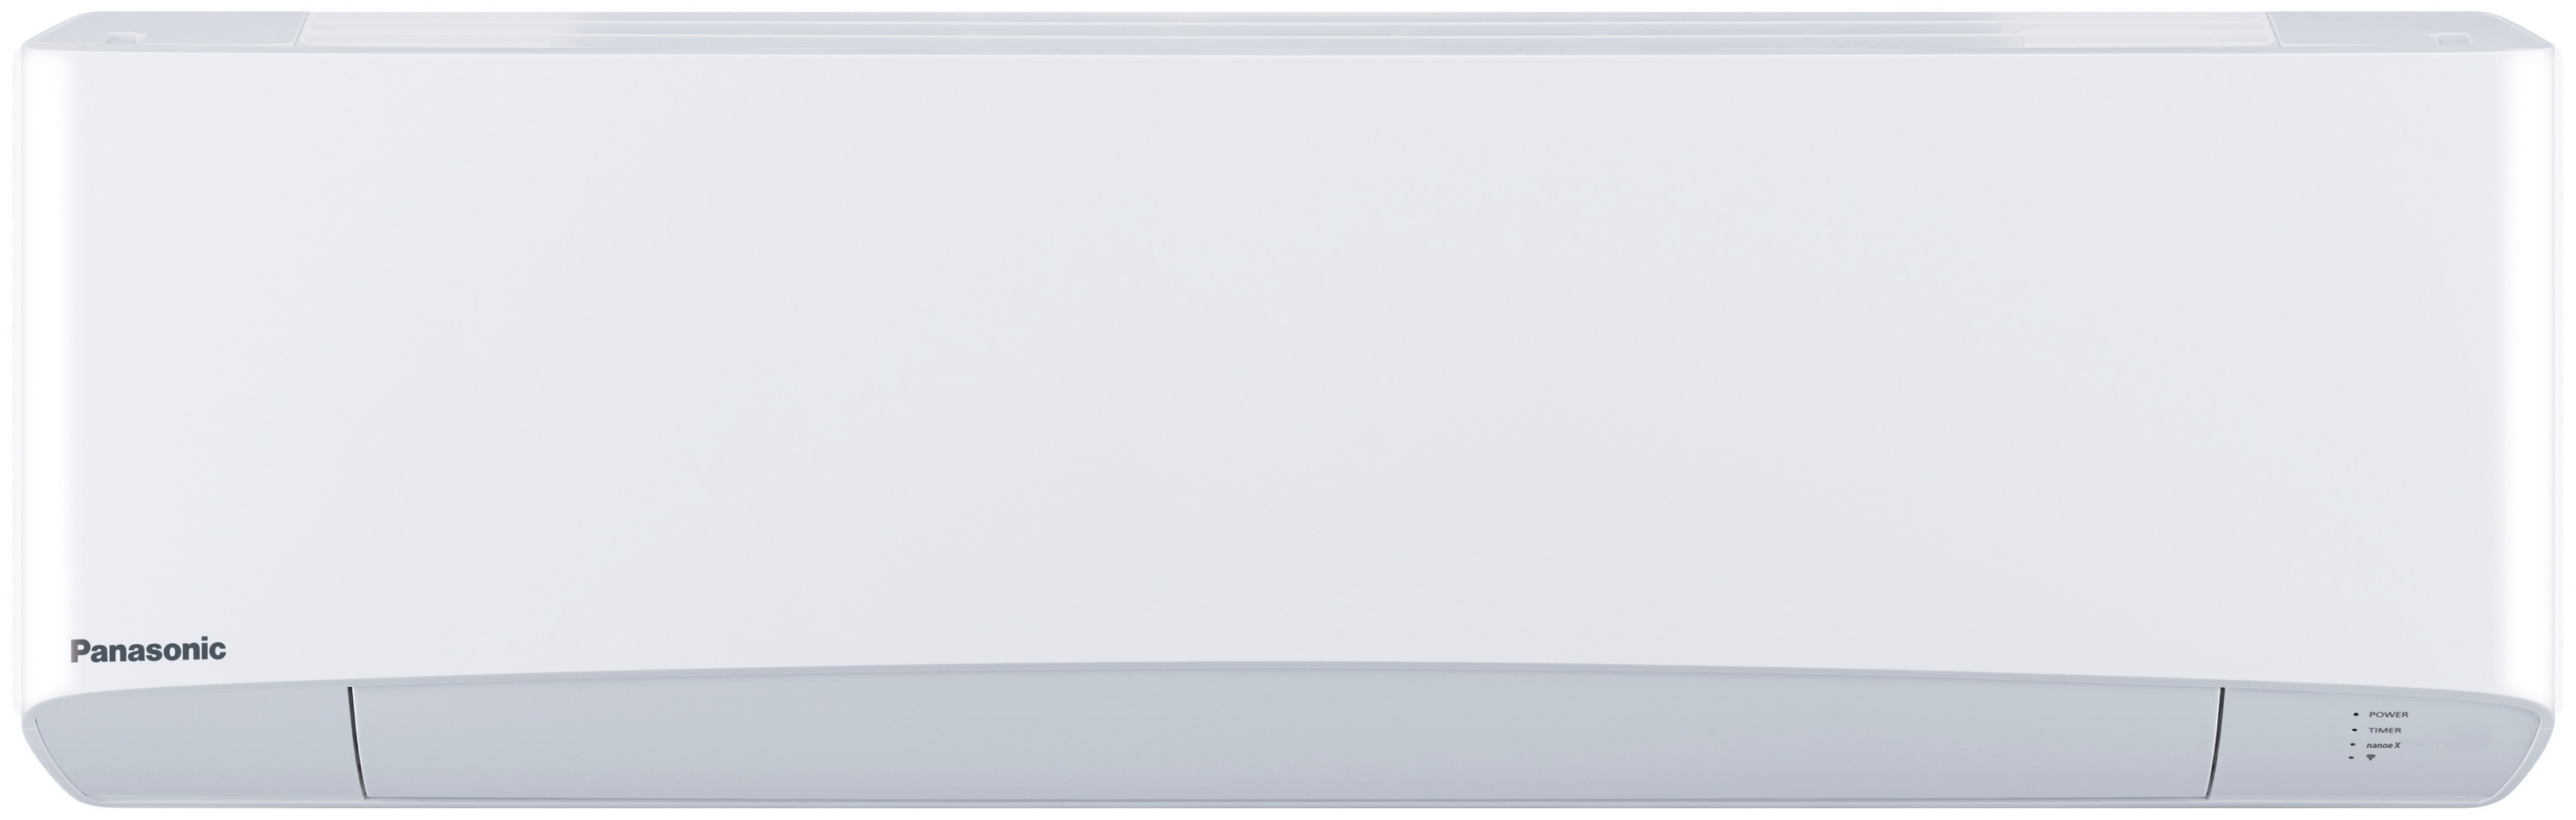 Кондиционер сплит-система Panasonic Flagship White CS/CU-Z35TKEW цена 49999.00 грн - фотография 2